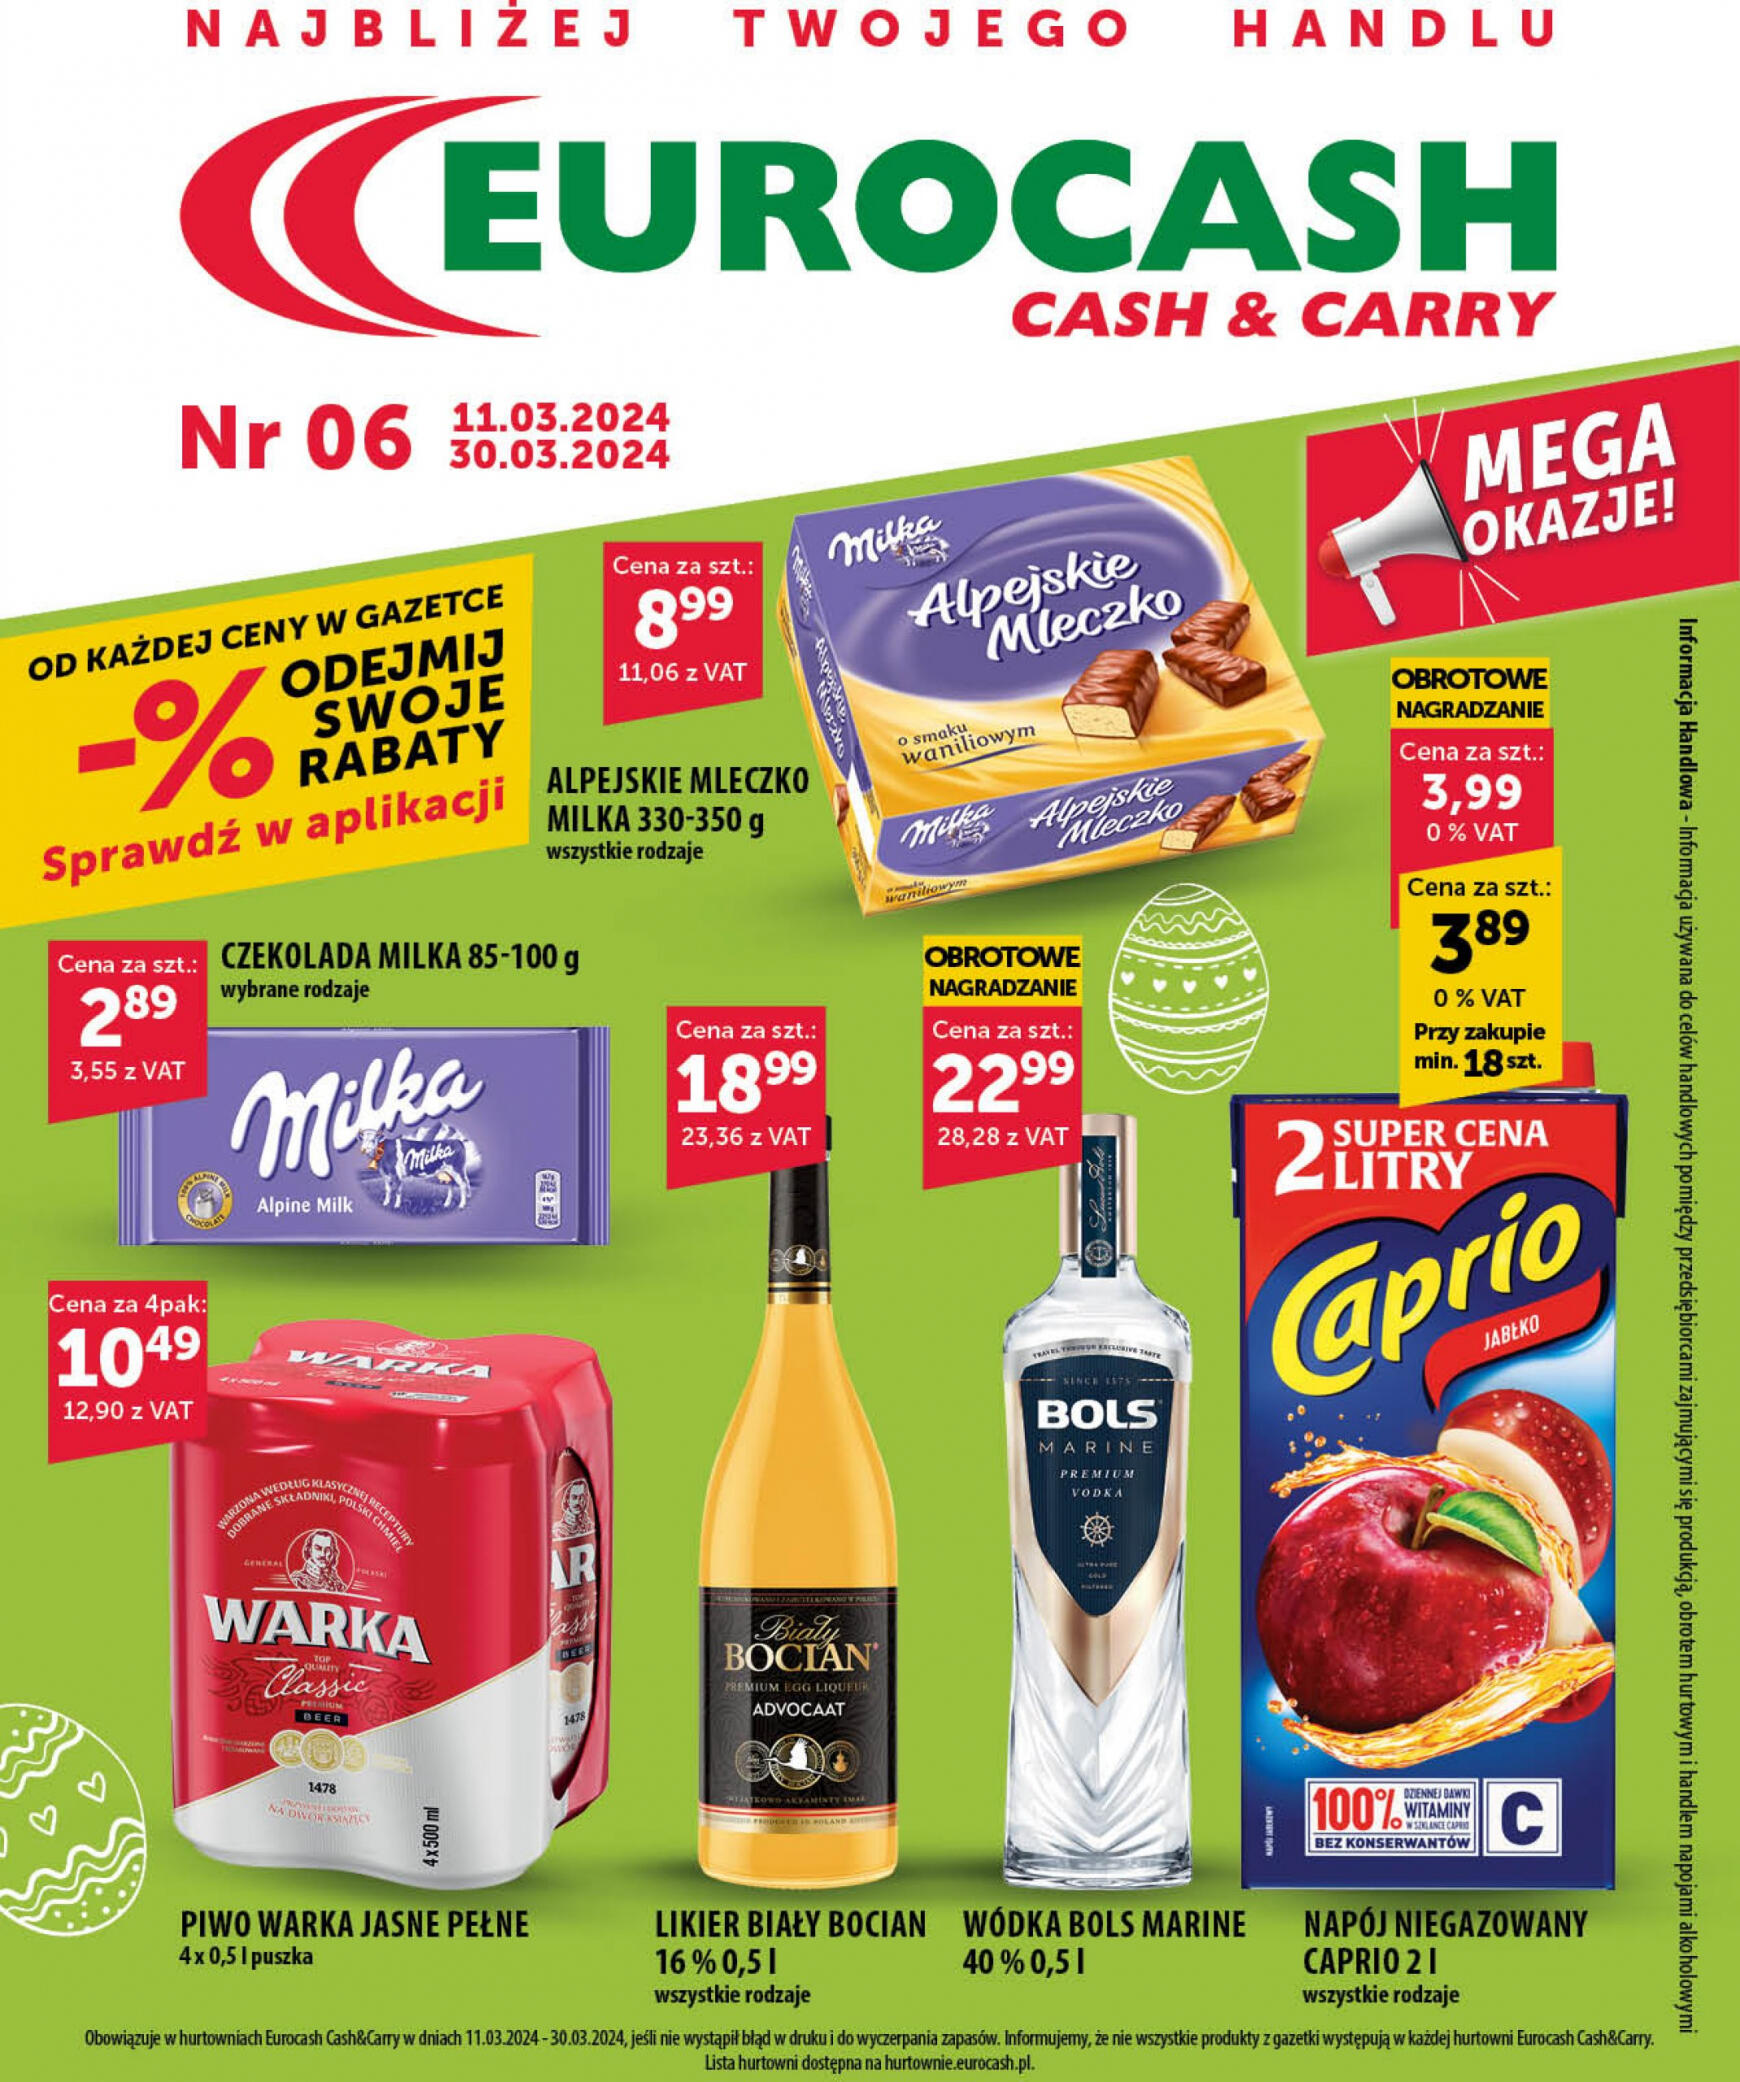 eurocash - Eurocash - Cash&Carry obowiązuje od 11.03.2024 - page: 1